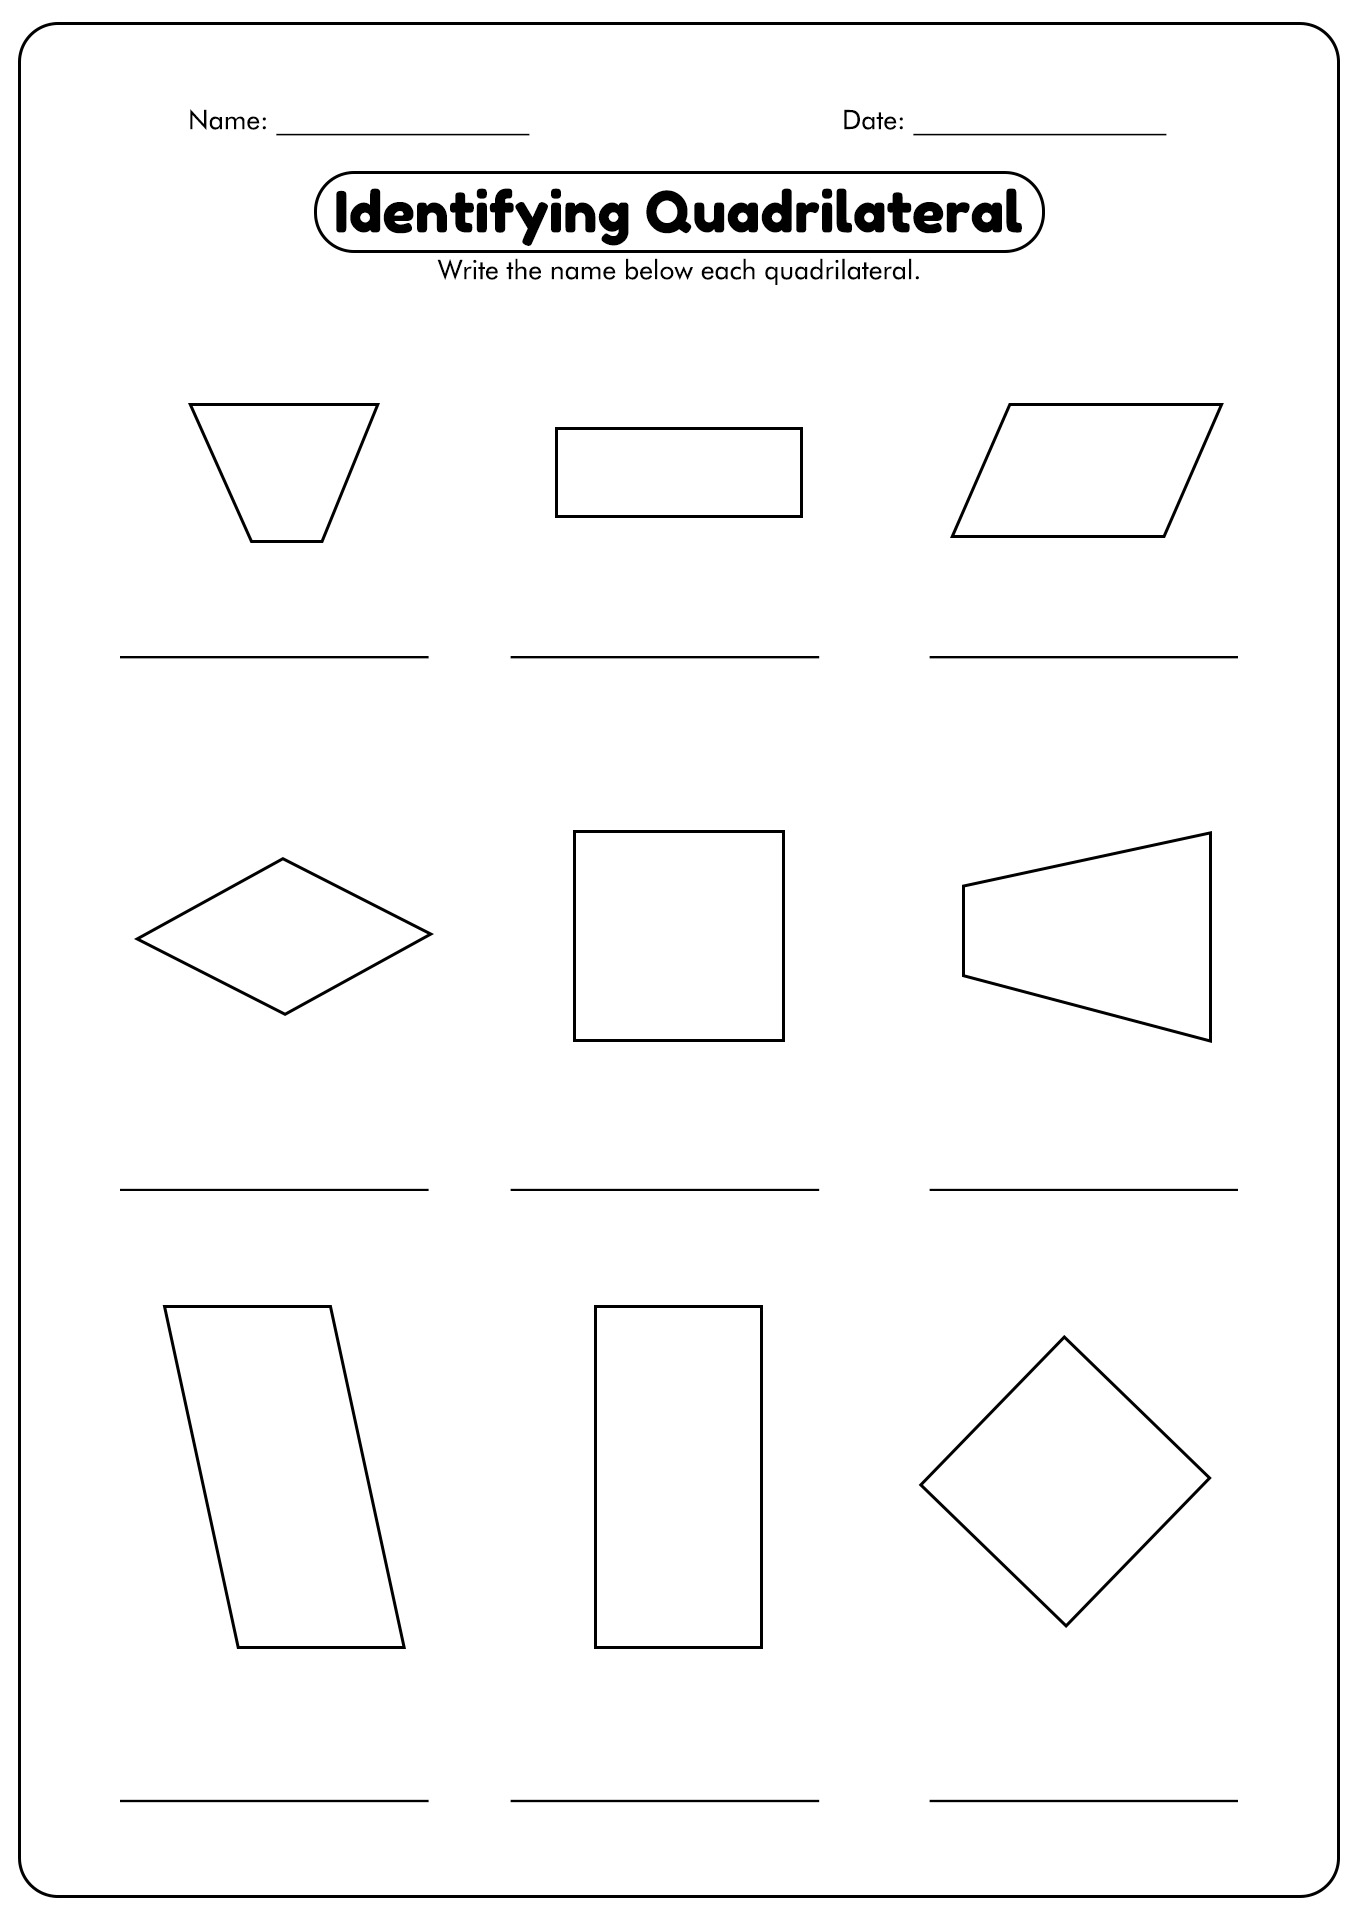 Types of Quadrilaterals Worksheet Image